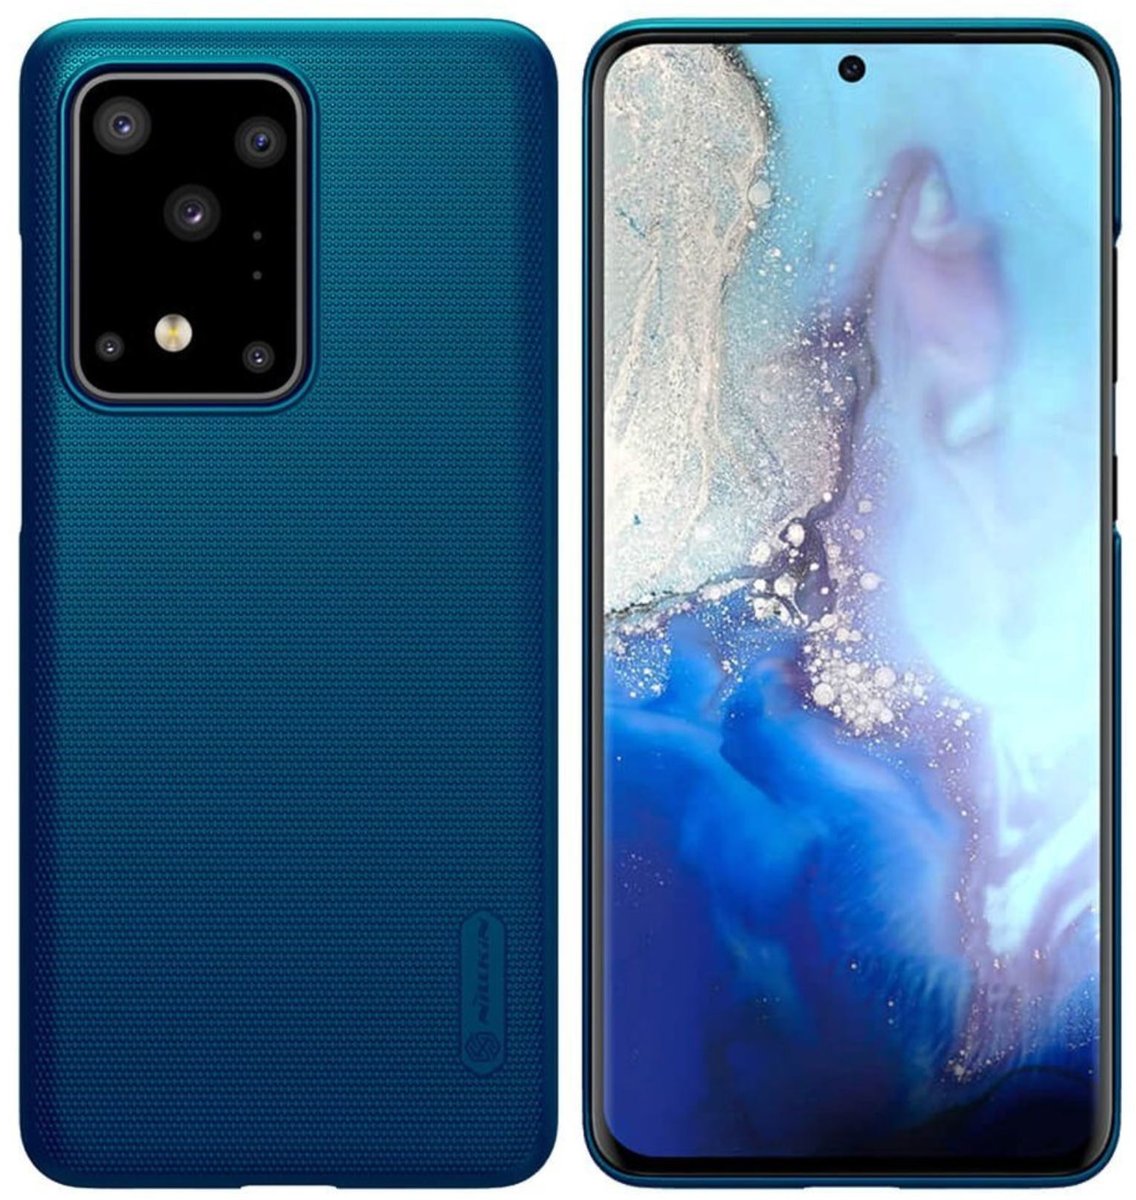 Nillkin Super Frosted Shield - Etui Samsung Galaxy S20 Ultra (Peacock Blue)